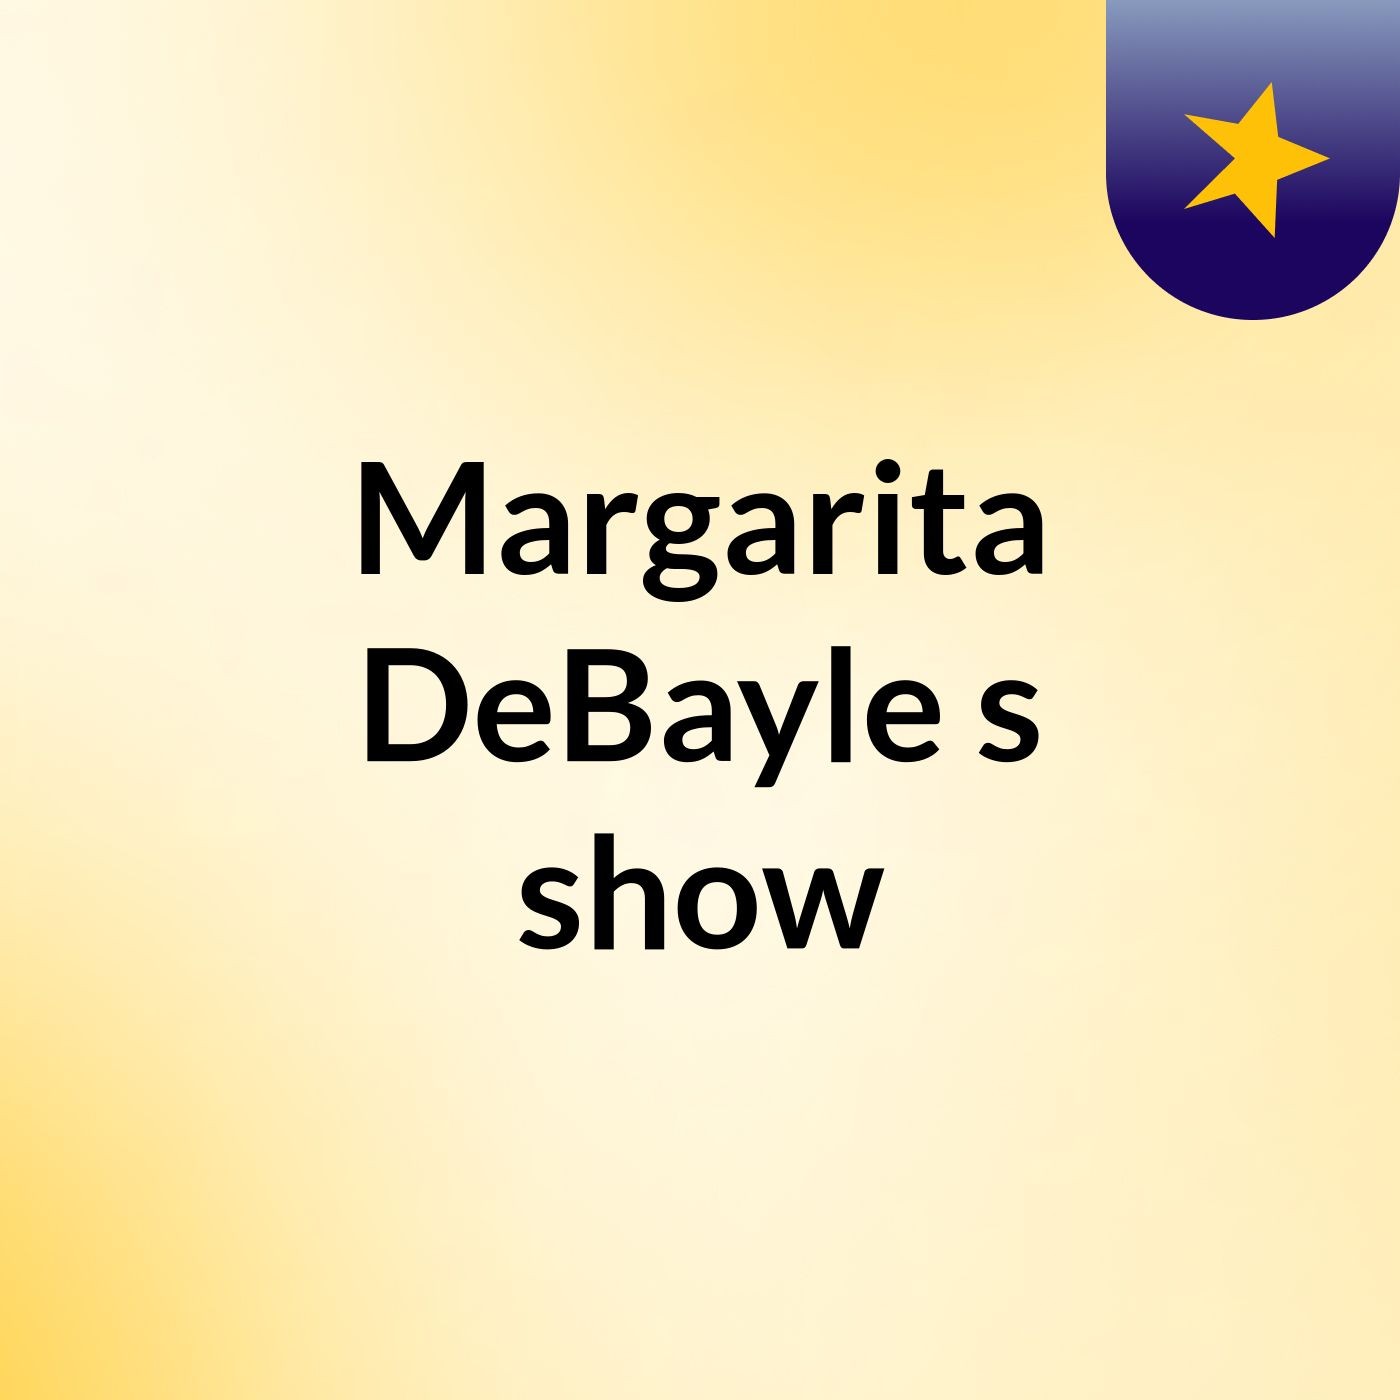 Margarita DeBayle's show